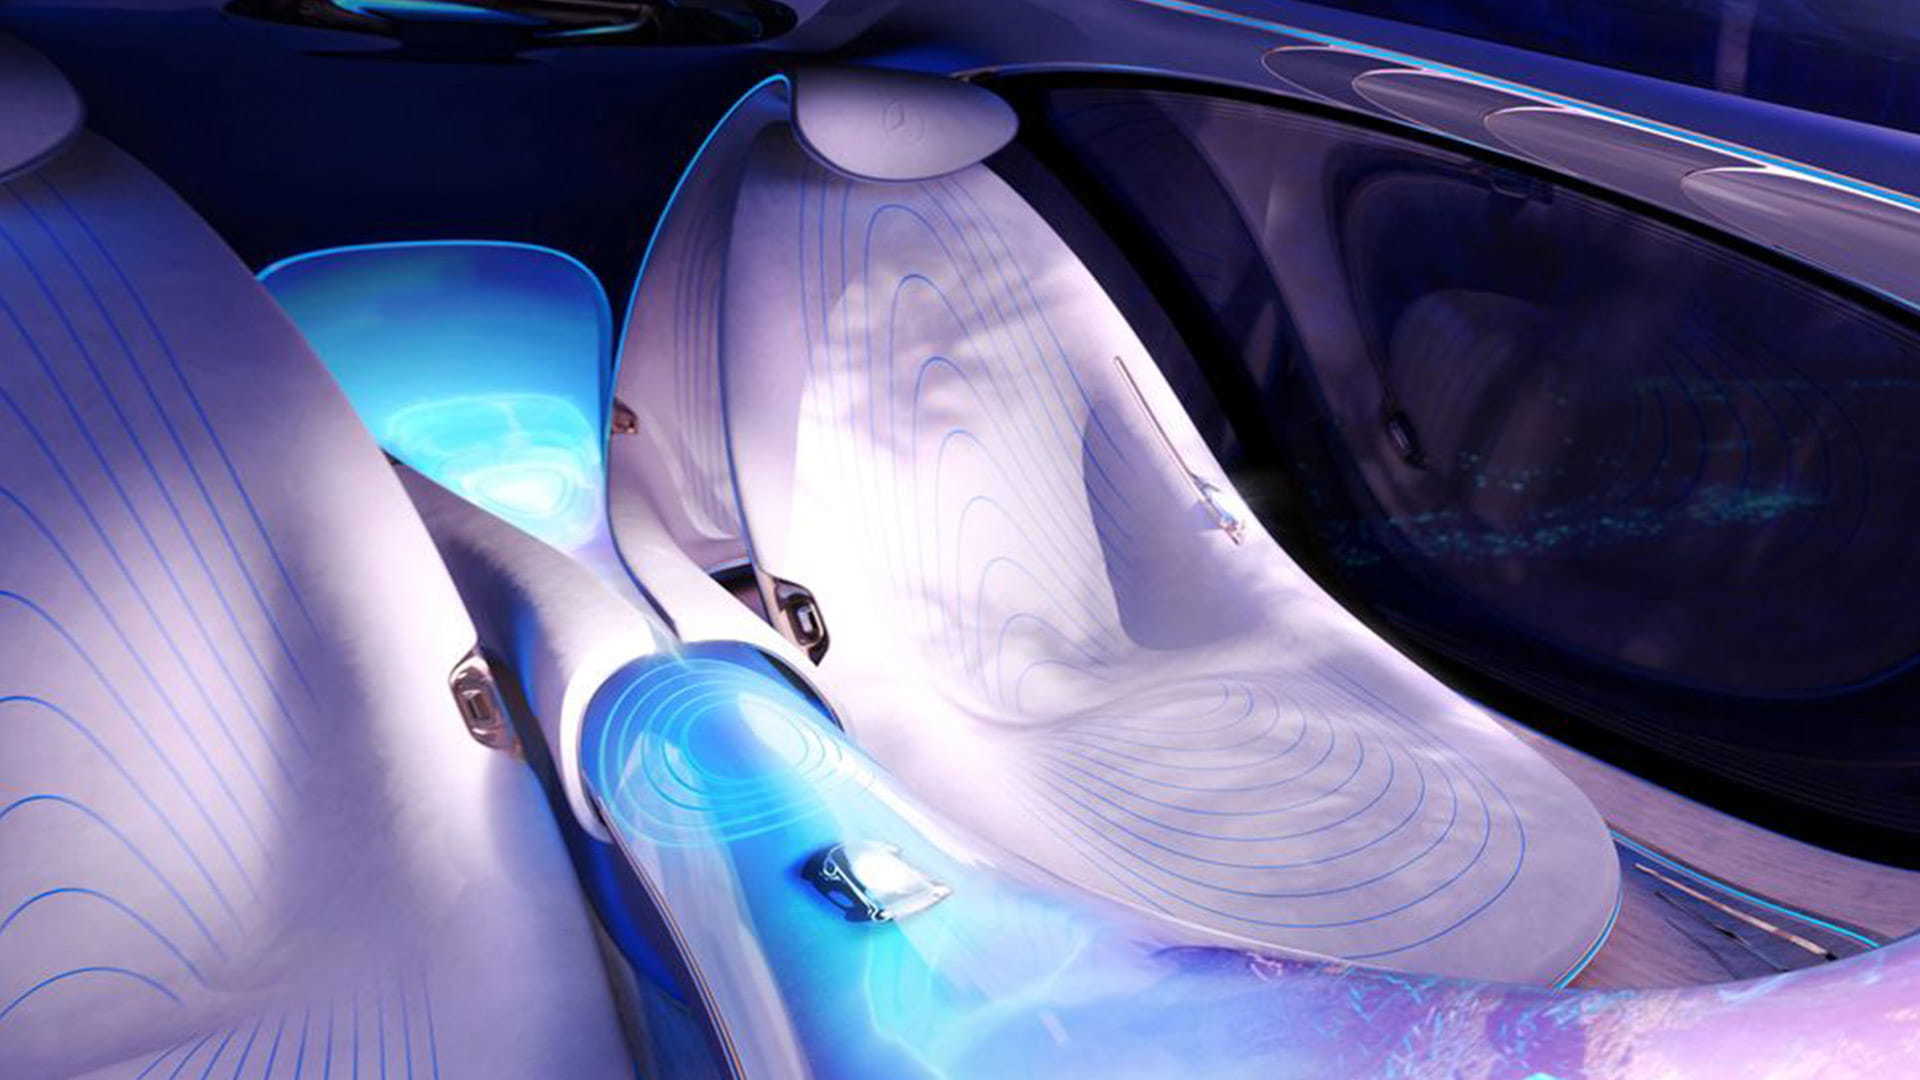 MercedesBenz unveils Avatarinspired concept car at CES 2020